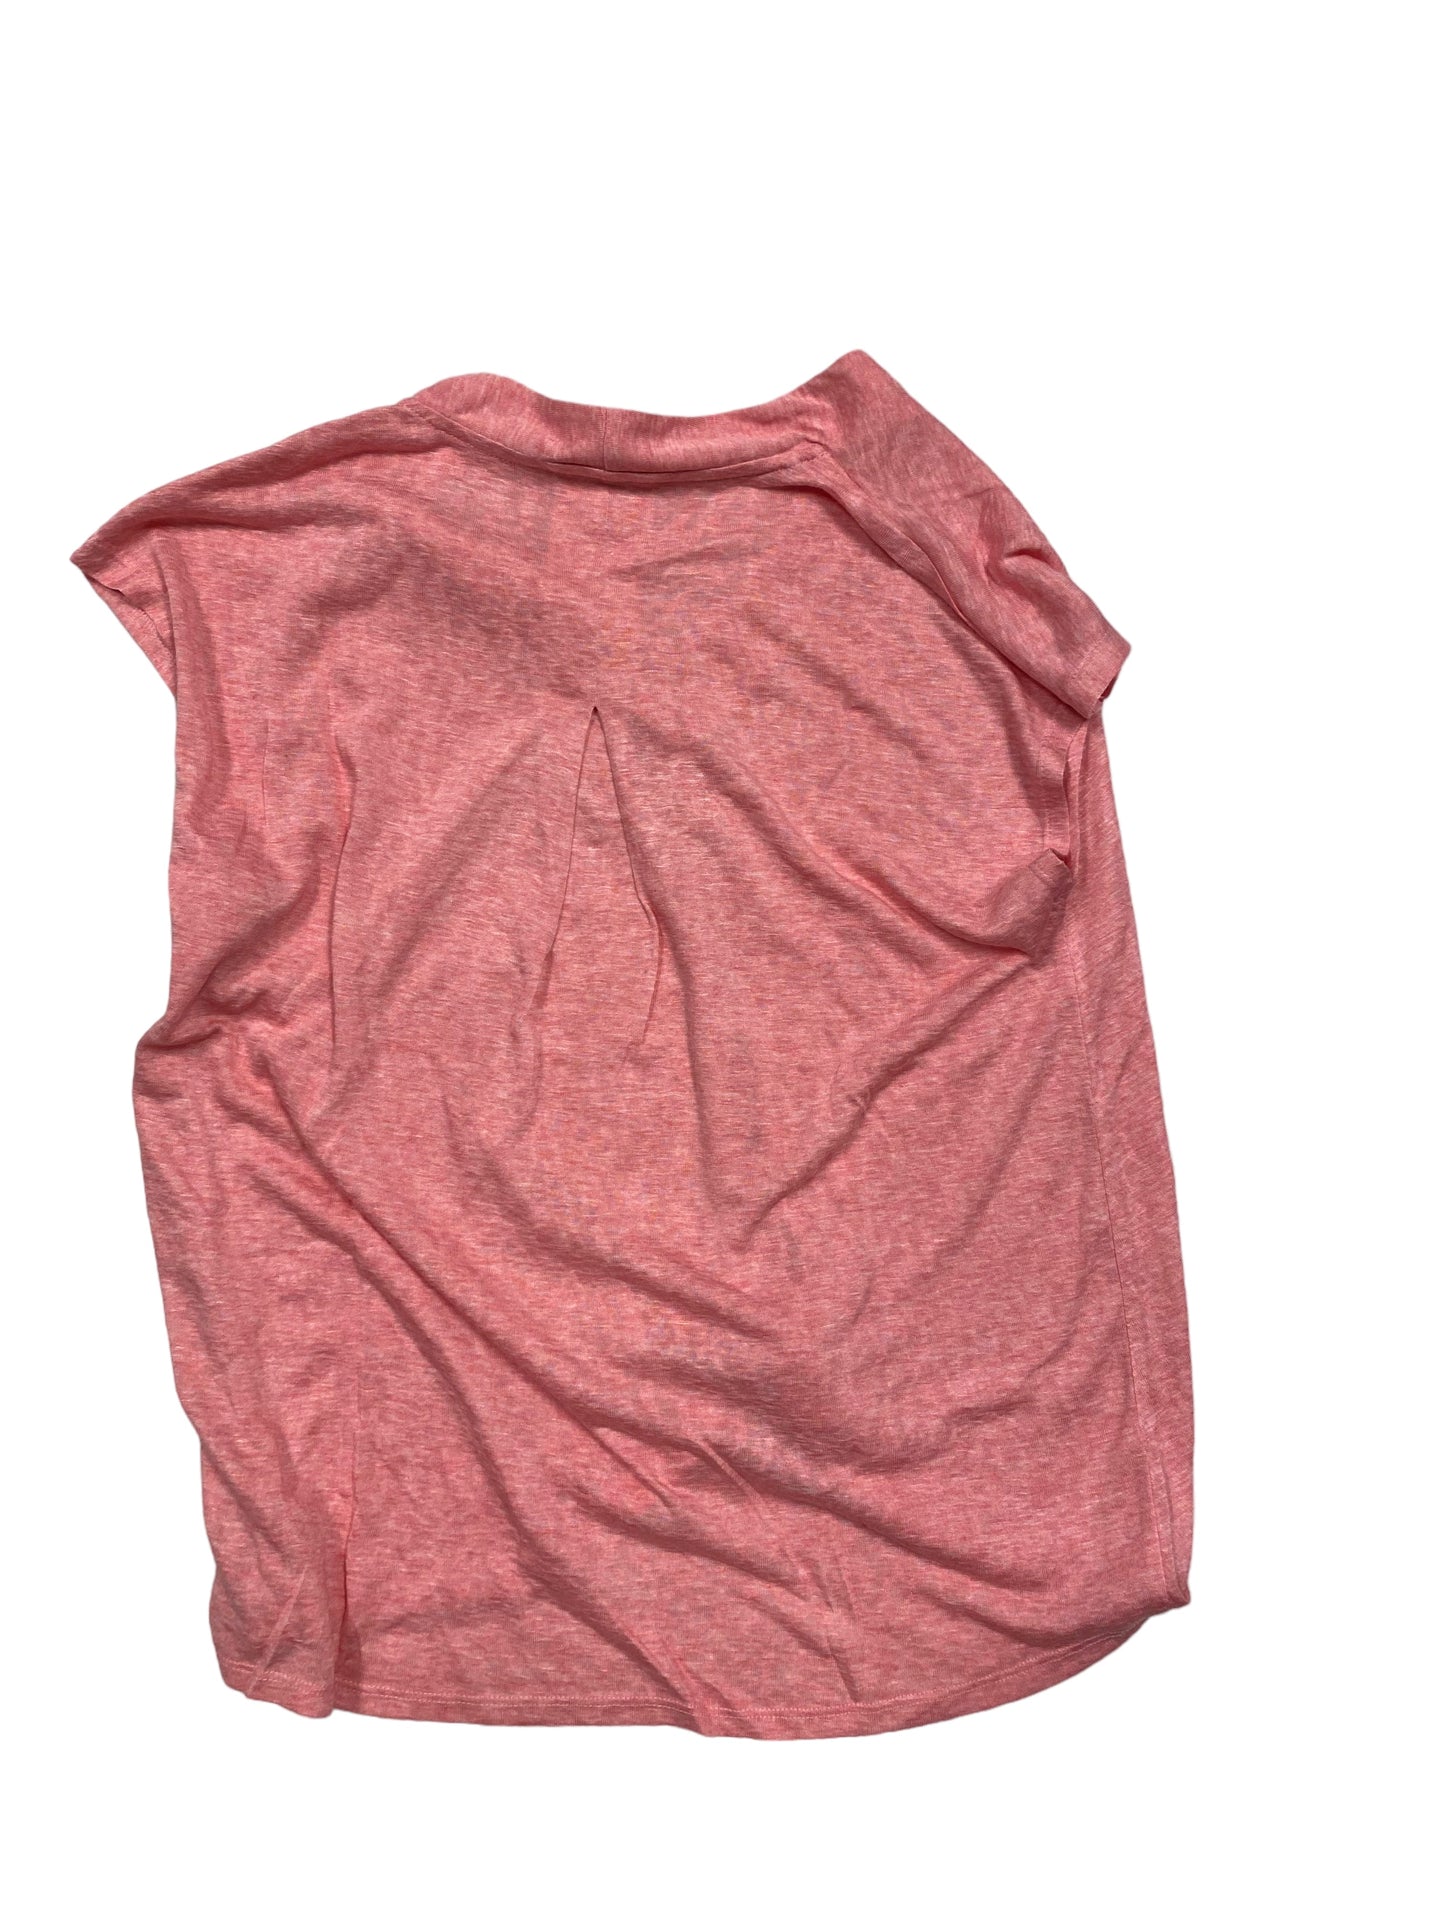 Pink Top Short Sleeve Matilda Jane, Size M